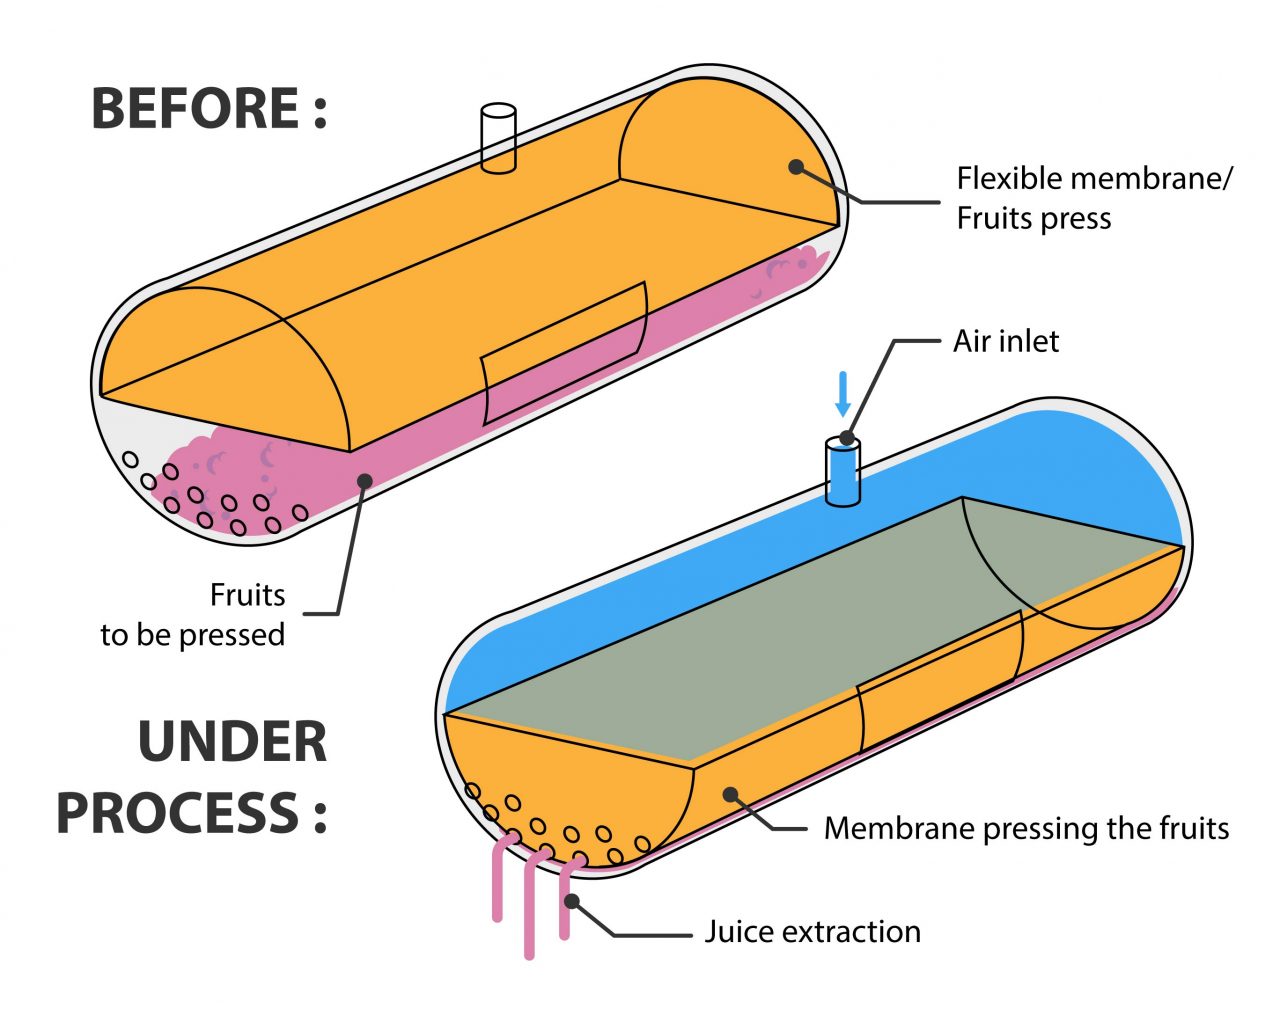 functional scheme about flexible membrane use